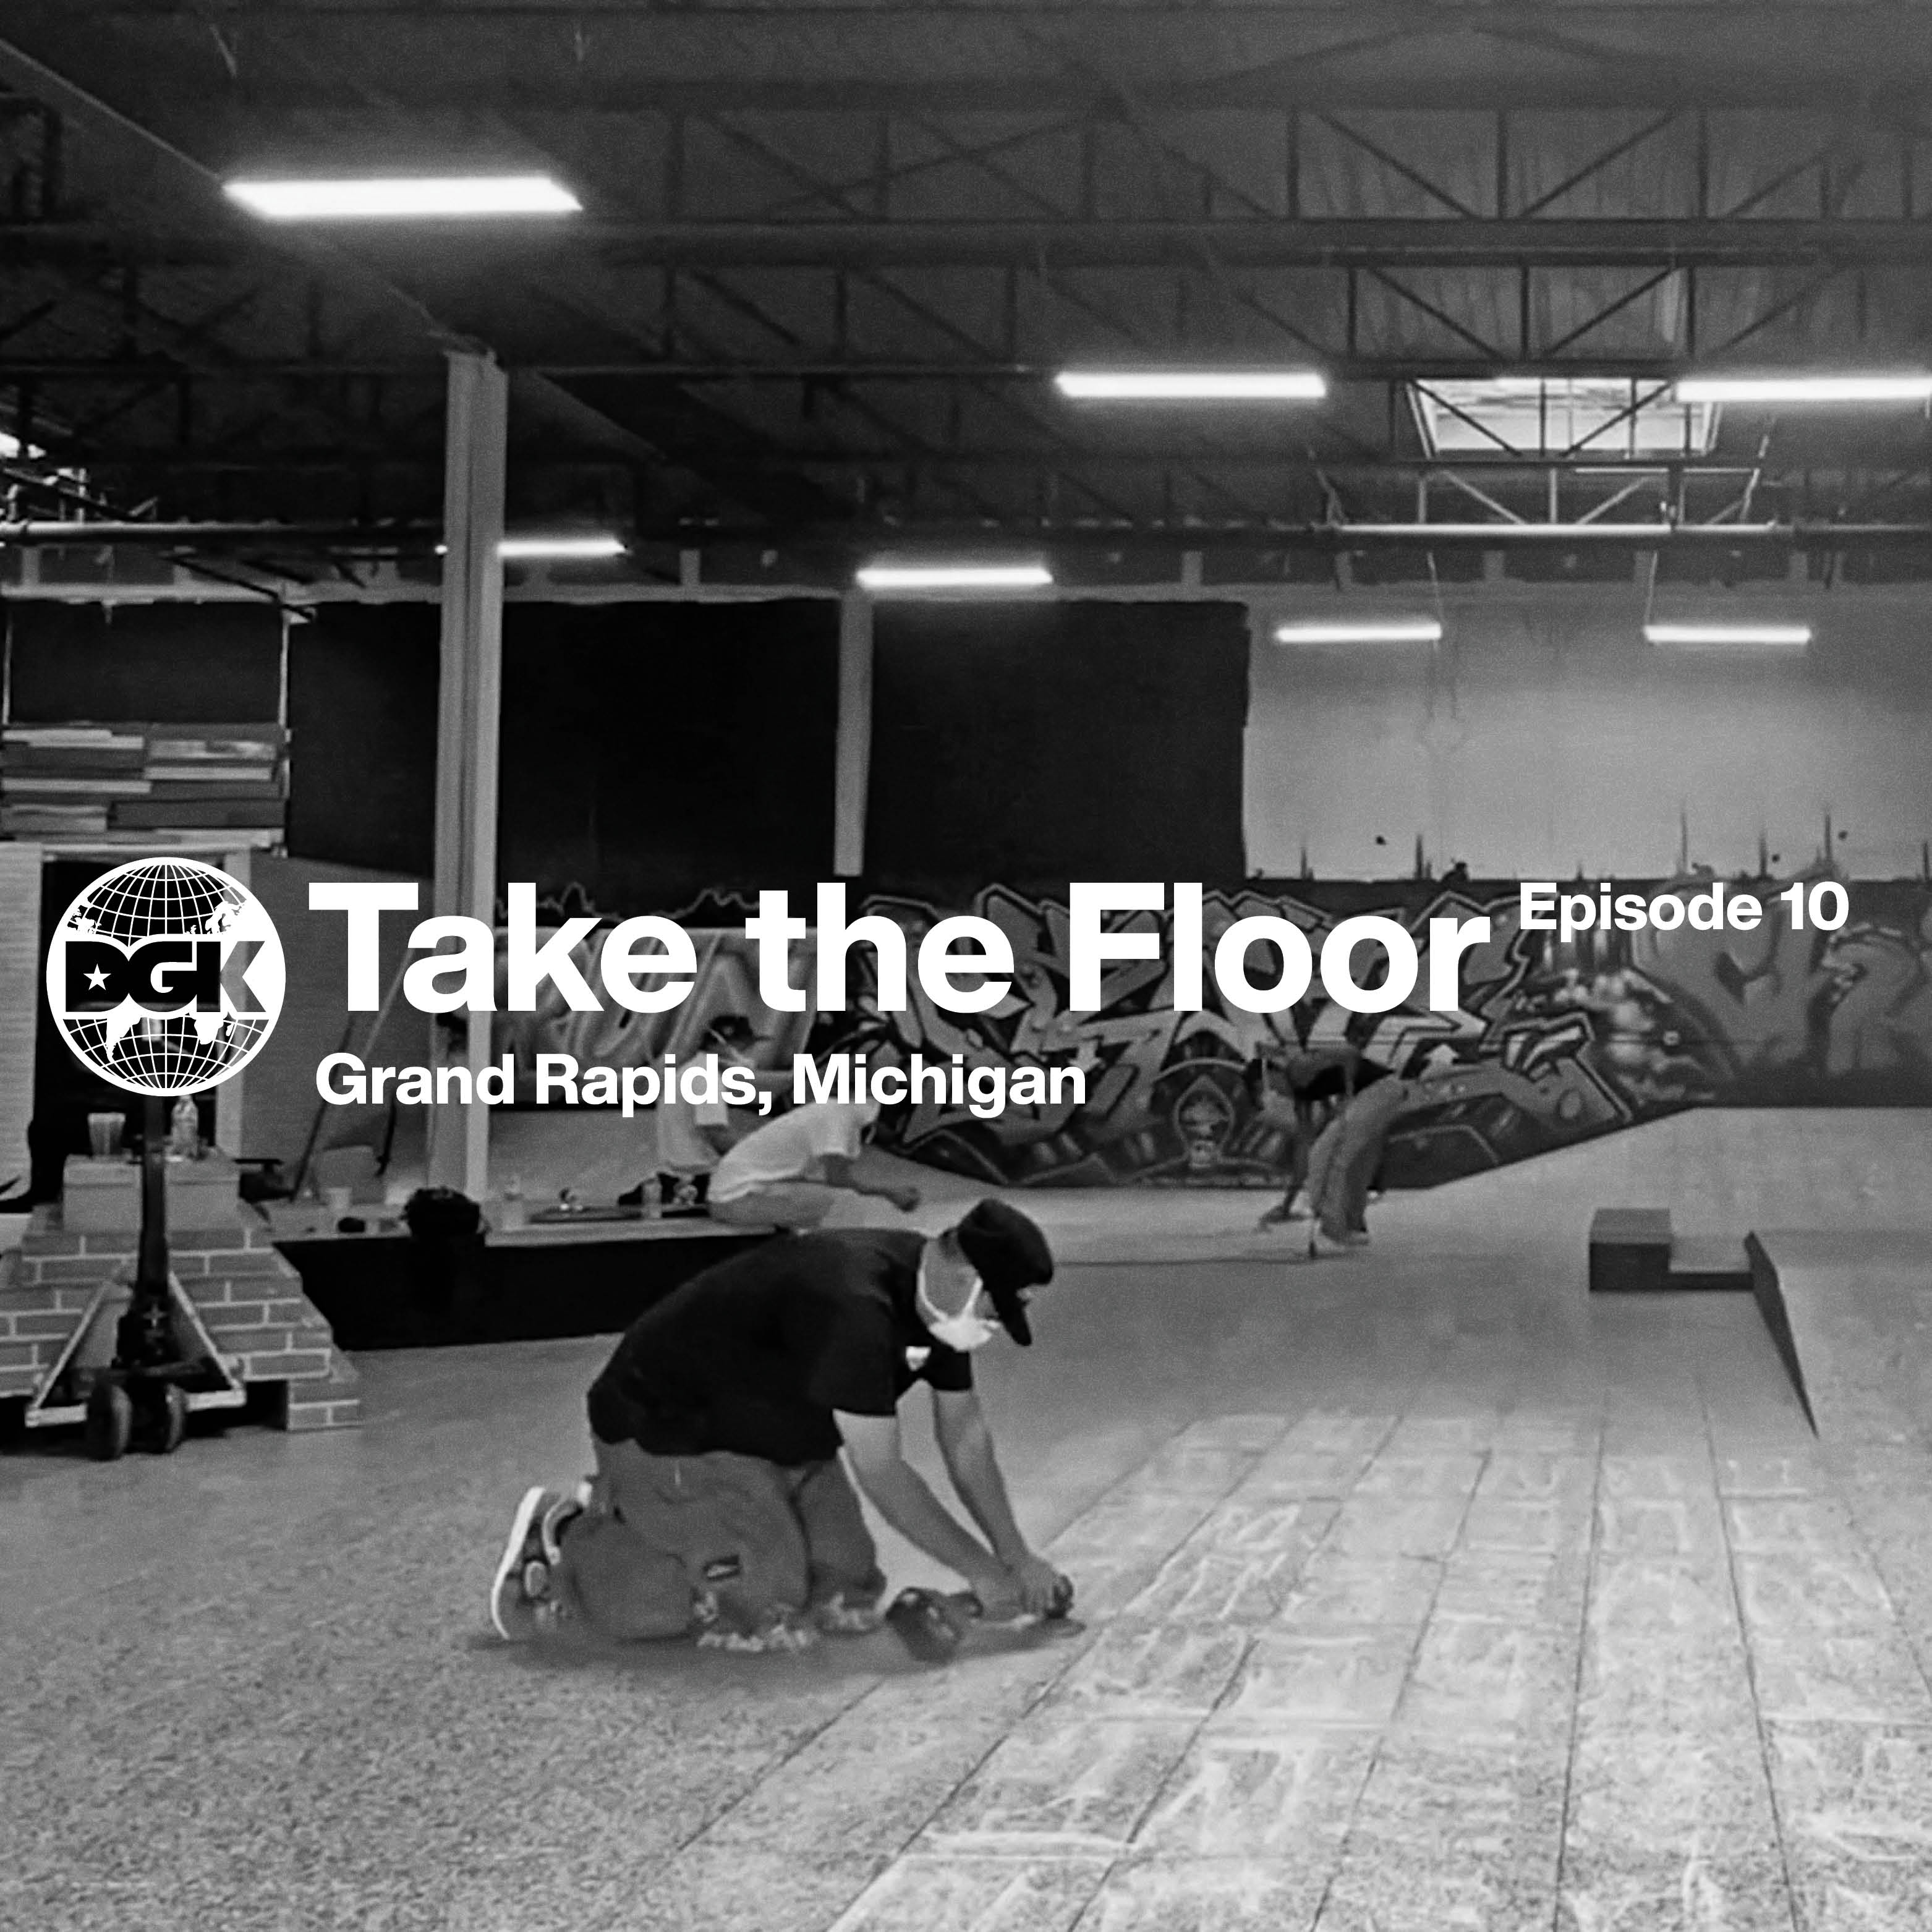 DGK - Take the Floor - Josh Kalis Episode 10 cover